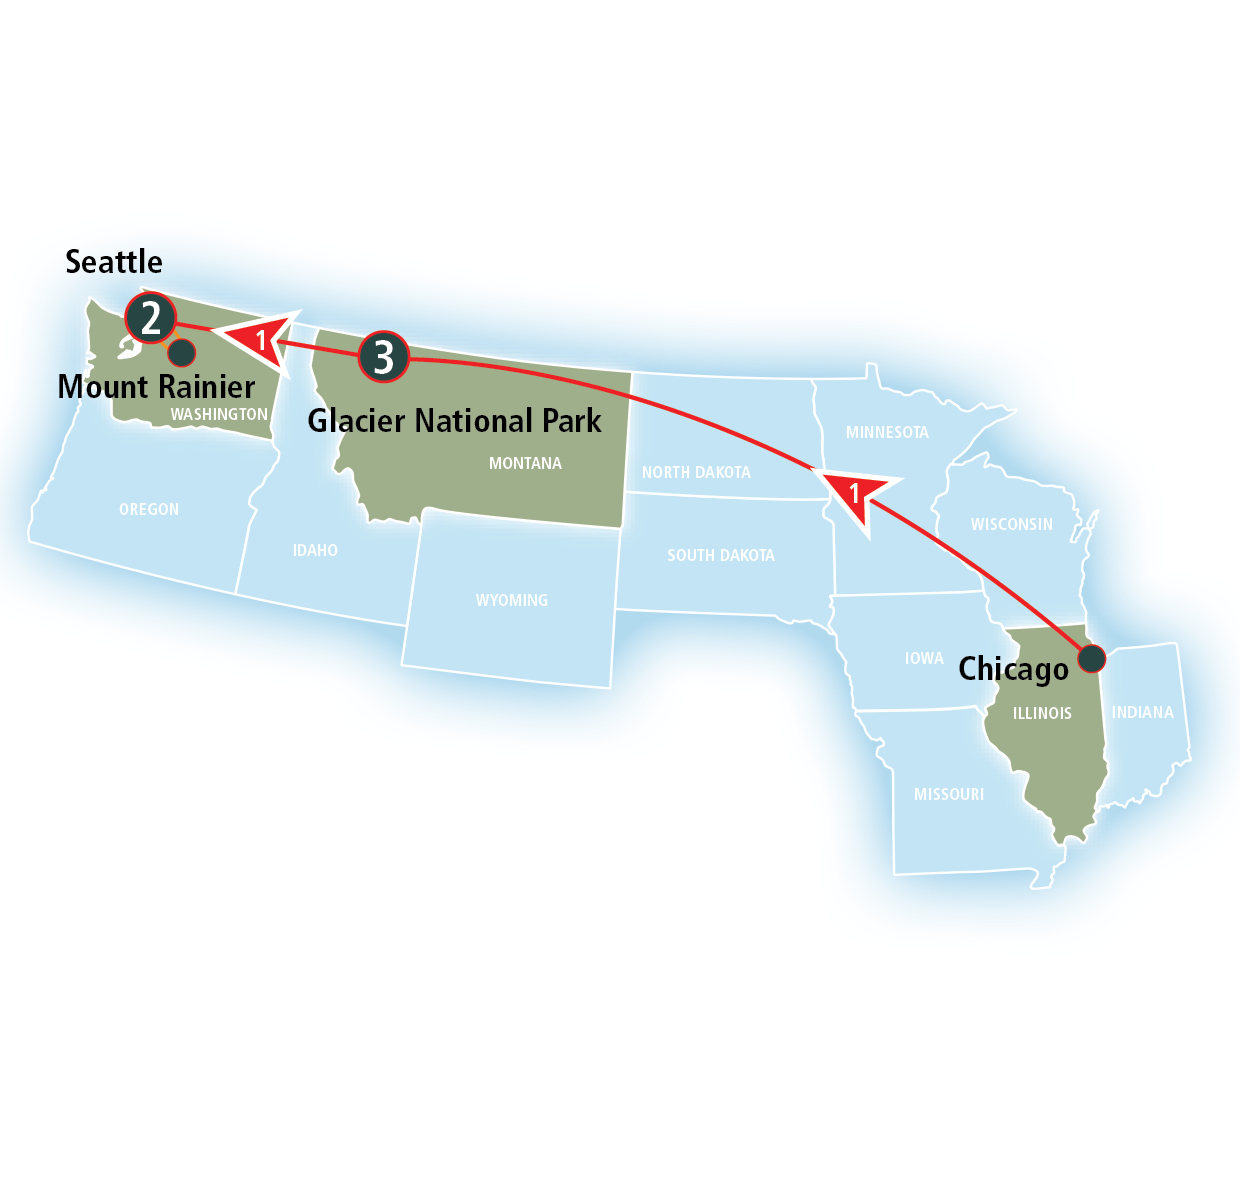 Day trip discoveries: Enjoy a local getaway to Mount Rainier National Park